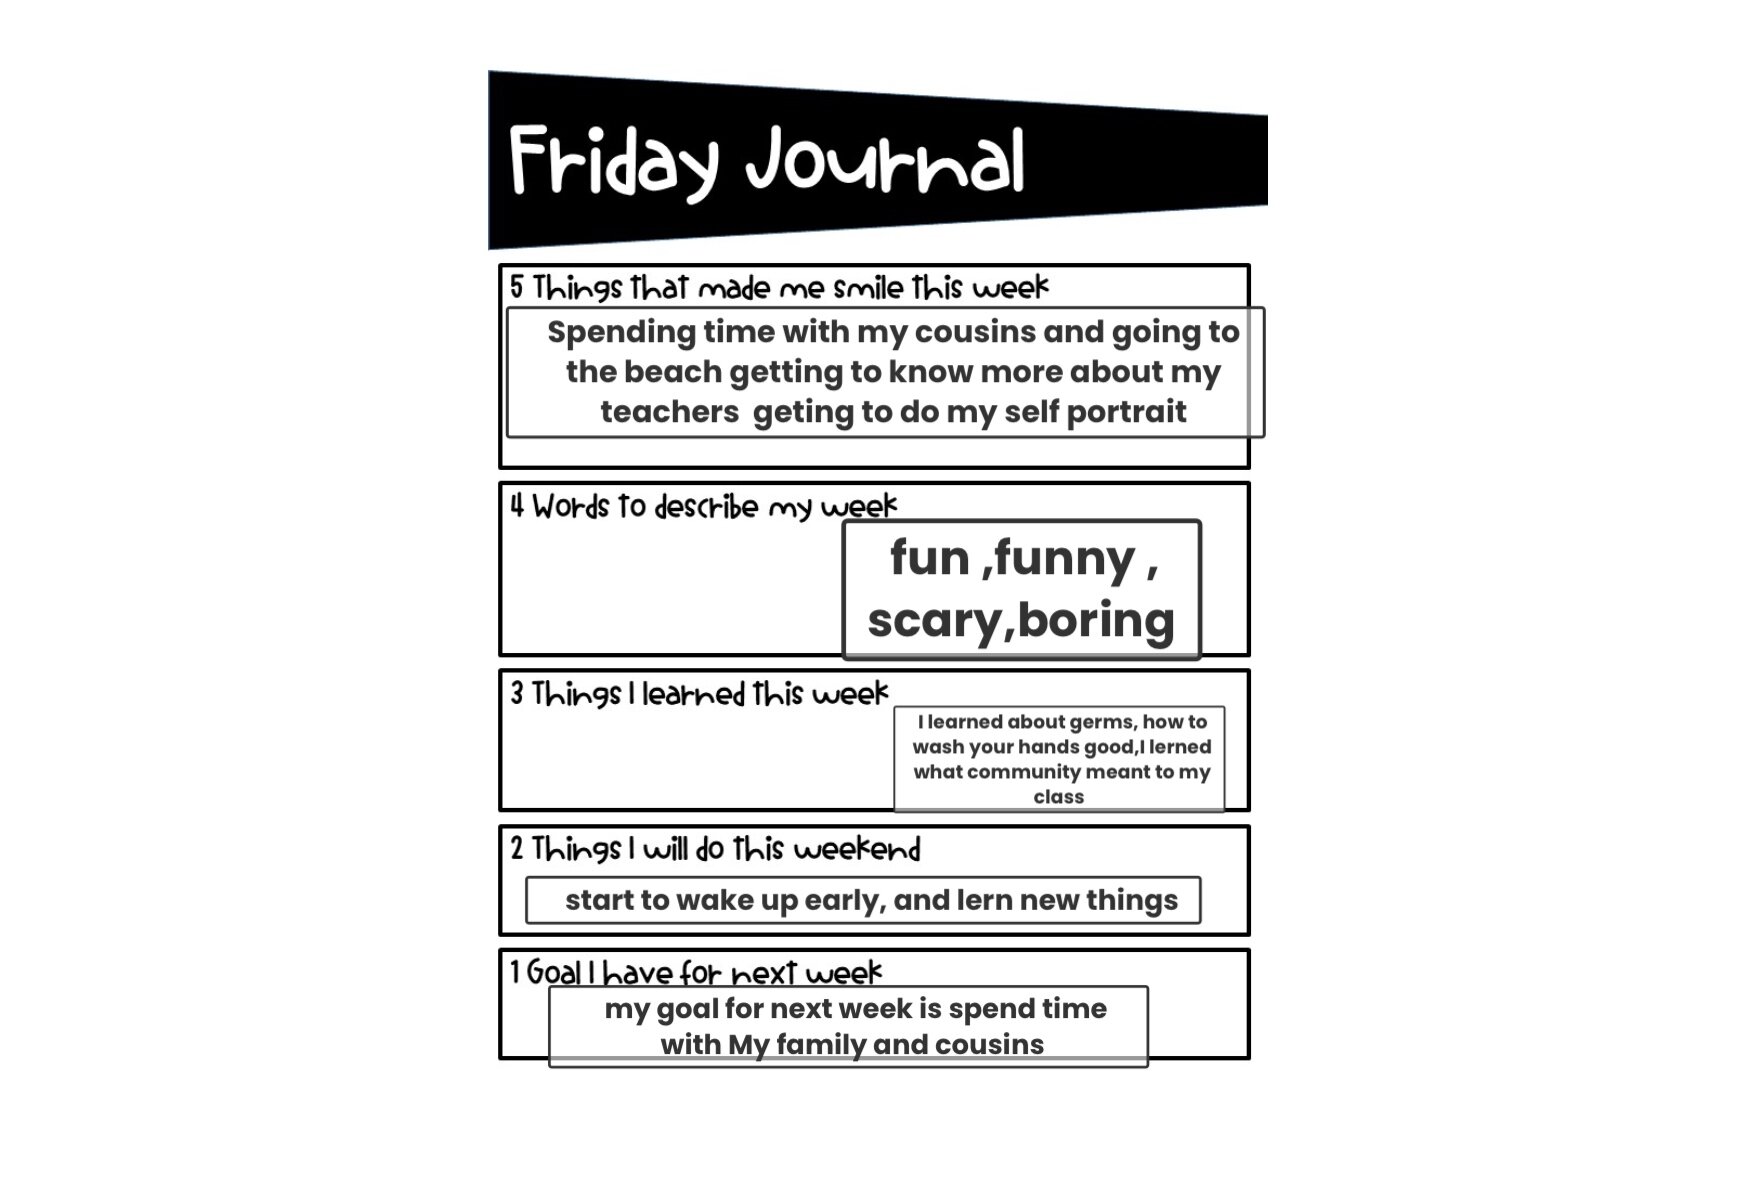 FridayJournal.jpg